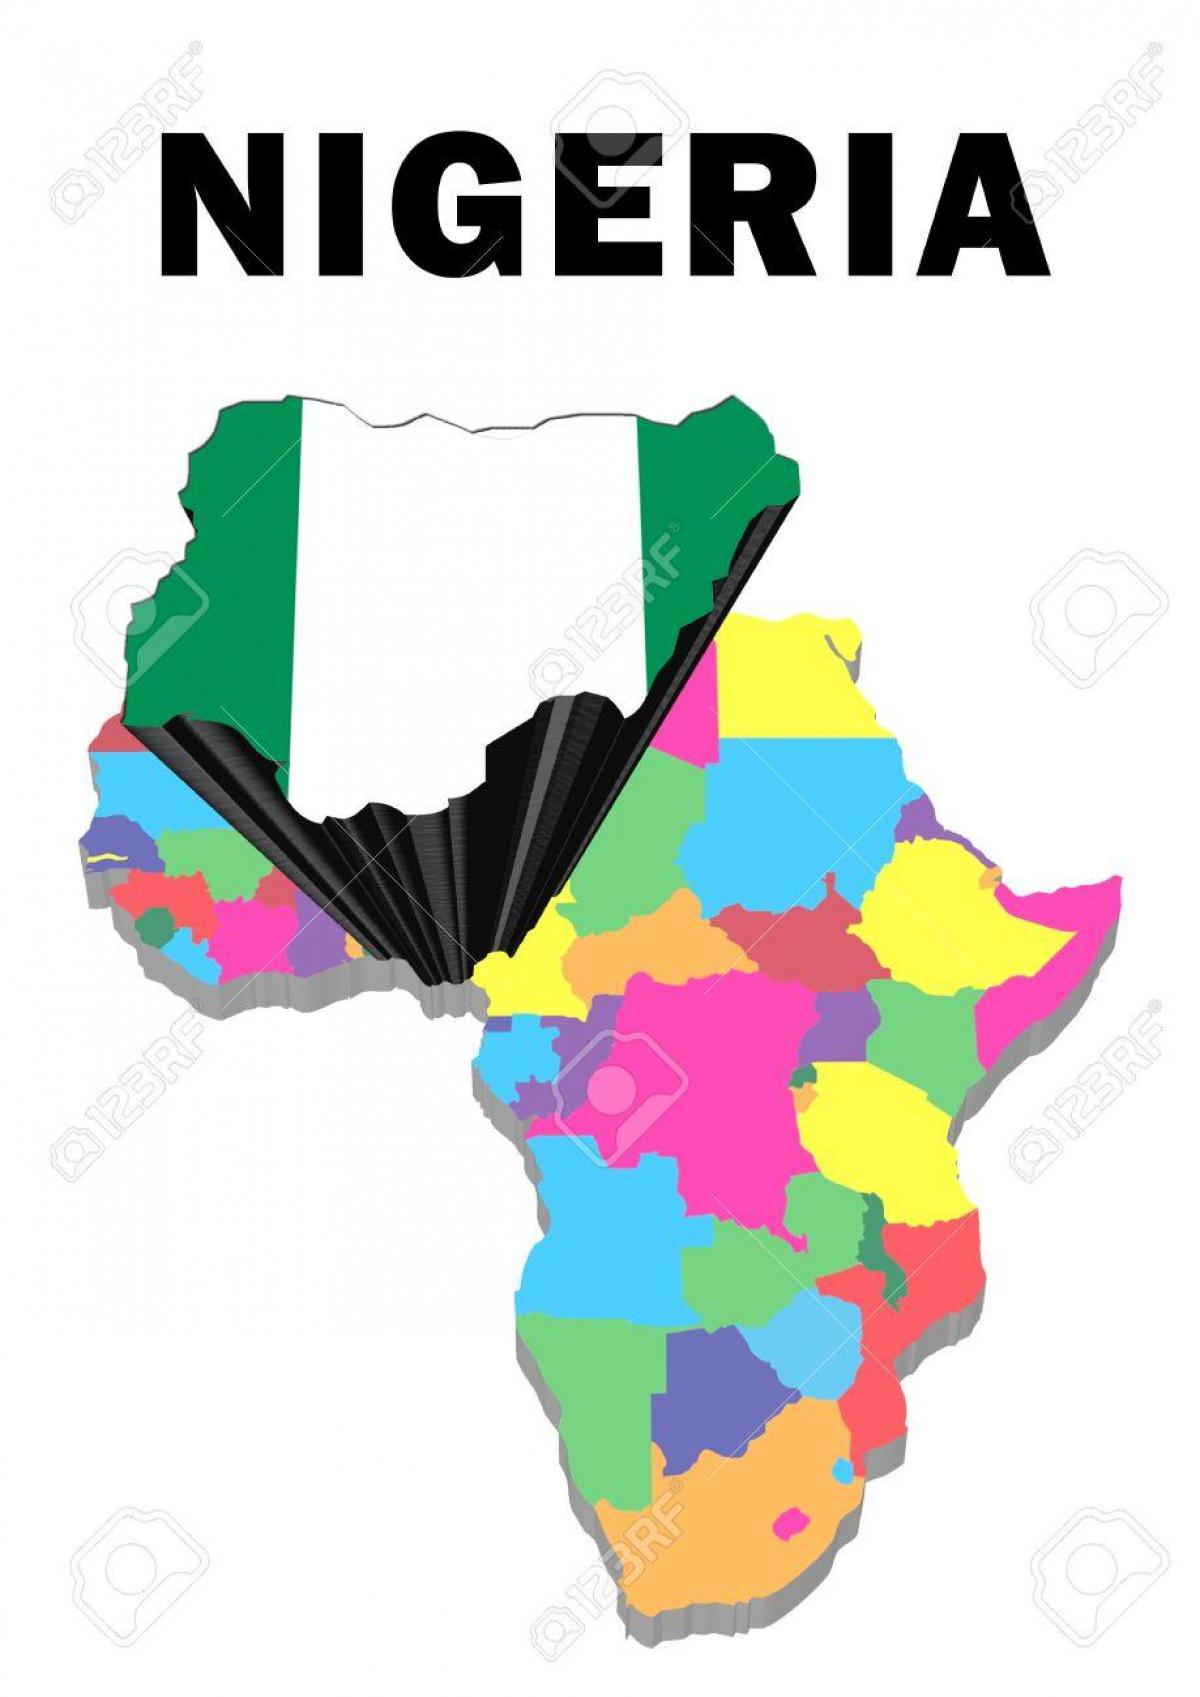 mapu afriky s nigéria zvýraznené